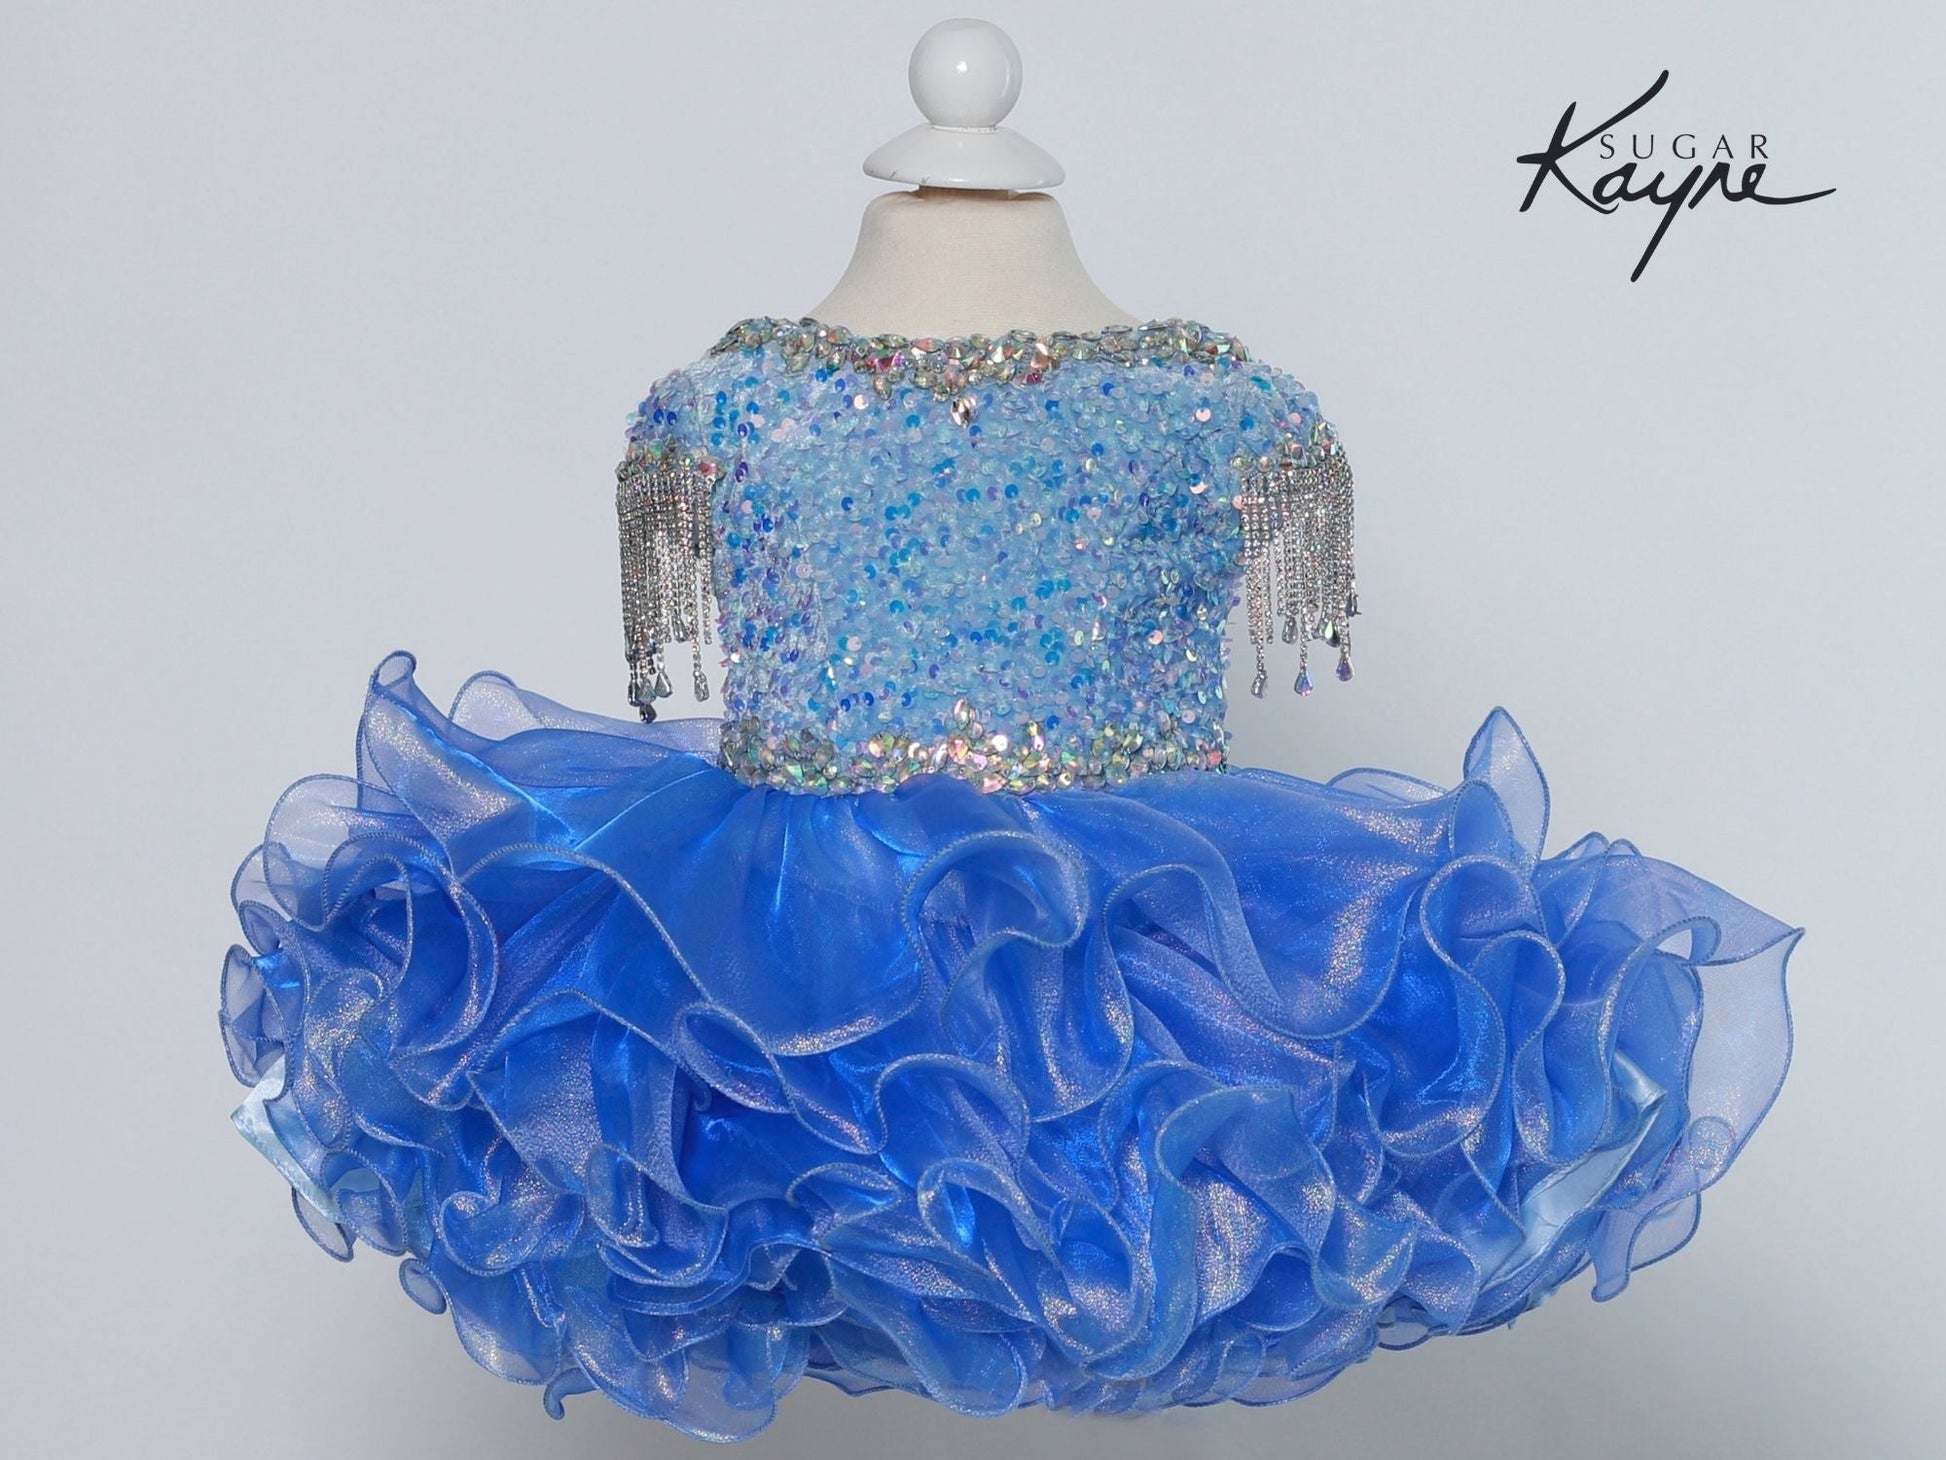 Sugar Kayne C203 Short Girls Cupcake Velvet Sequin Pageant Dress Crystal Fringe Tassel Cap Sleeve corset back  Sizes: 0M, 6M, 12M, 18M, 24M, 2T, 3T, 4T, 5T, 6T  Colors: Cotton Candy, Powder Blue, Unicorn